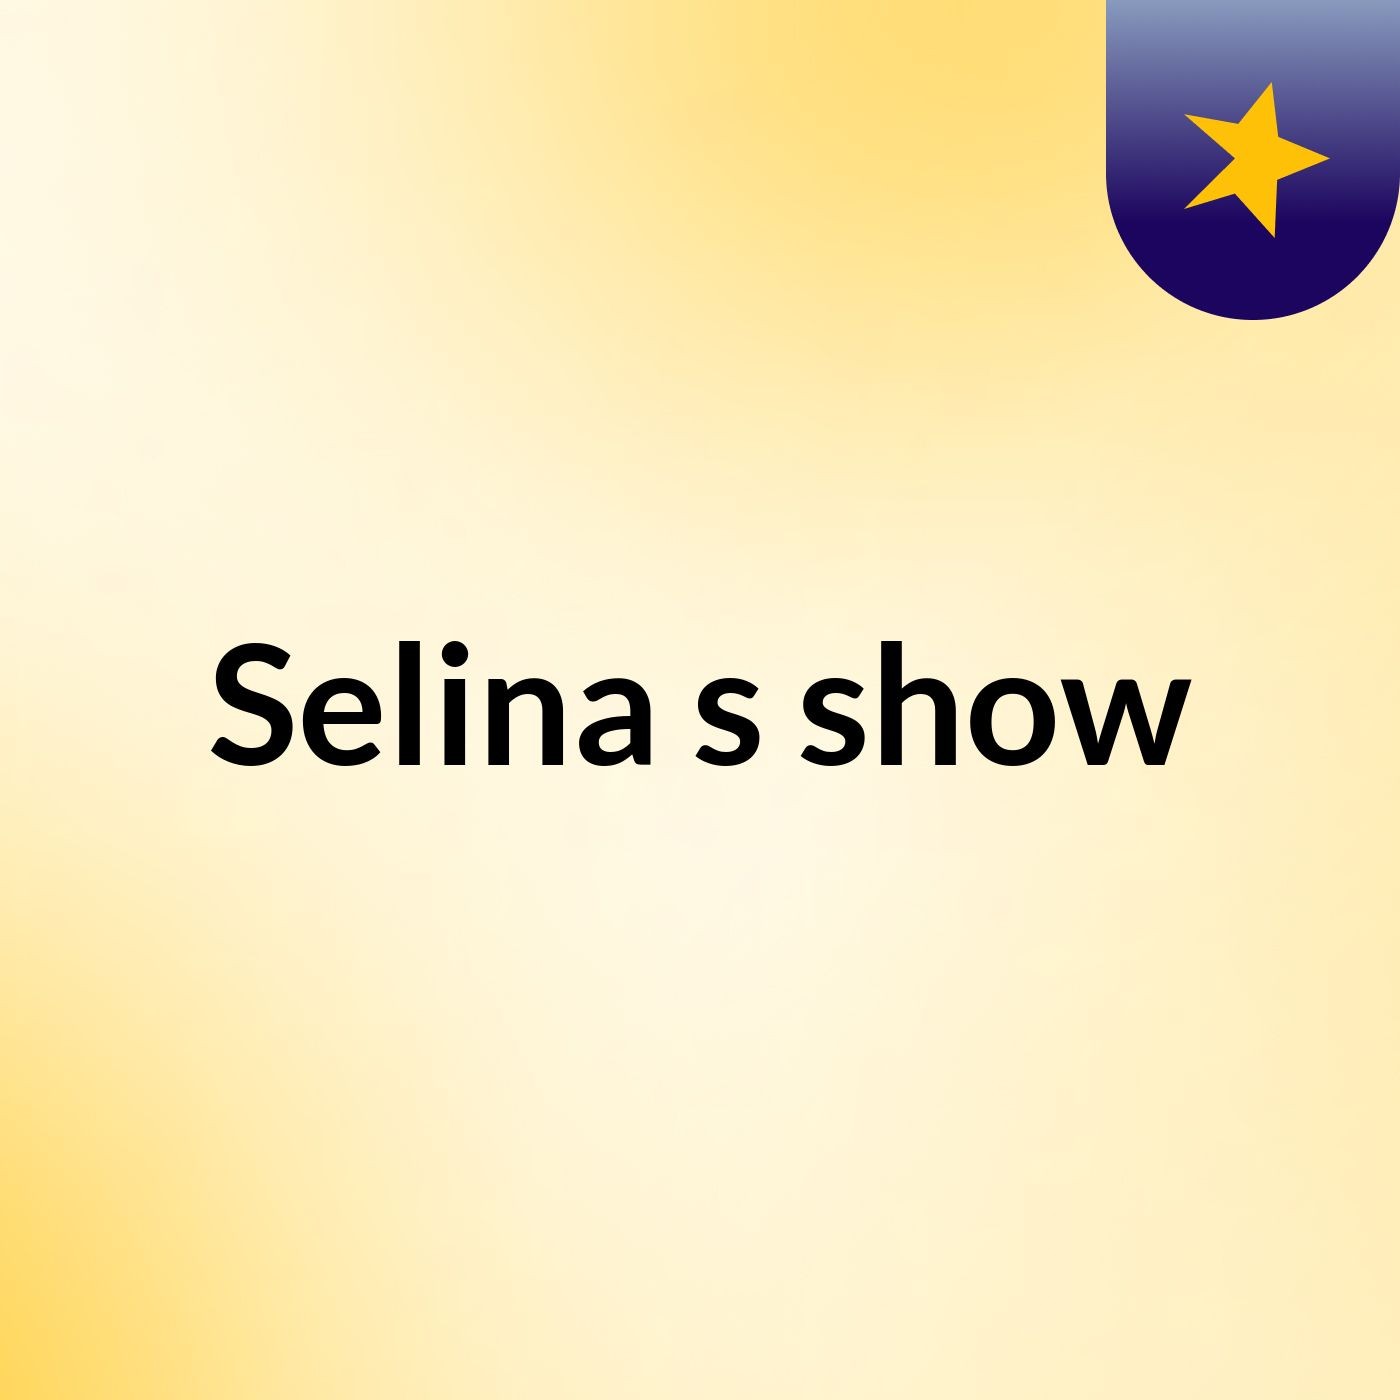 Selina's show